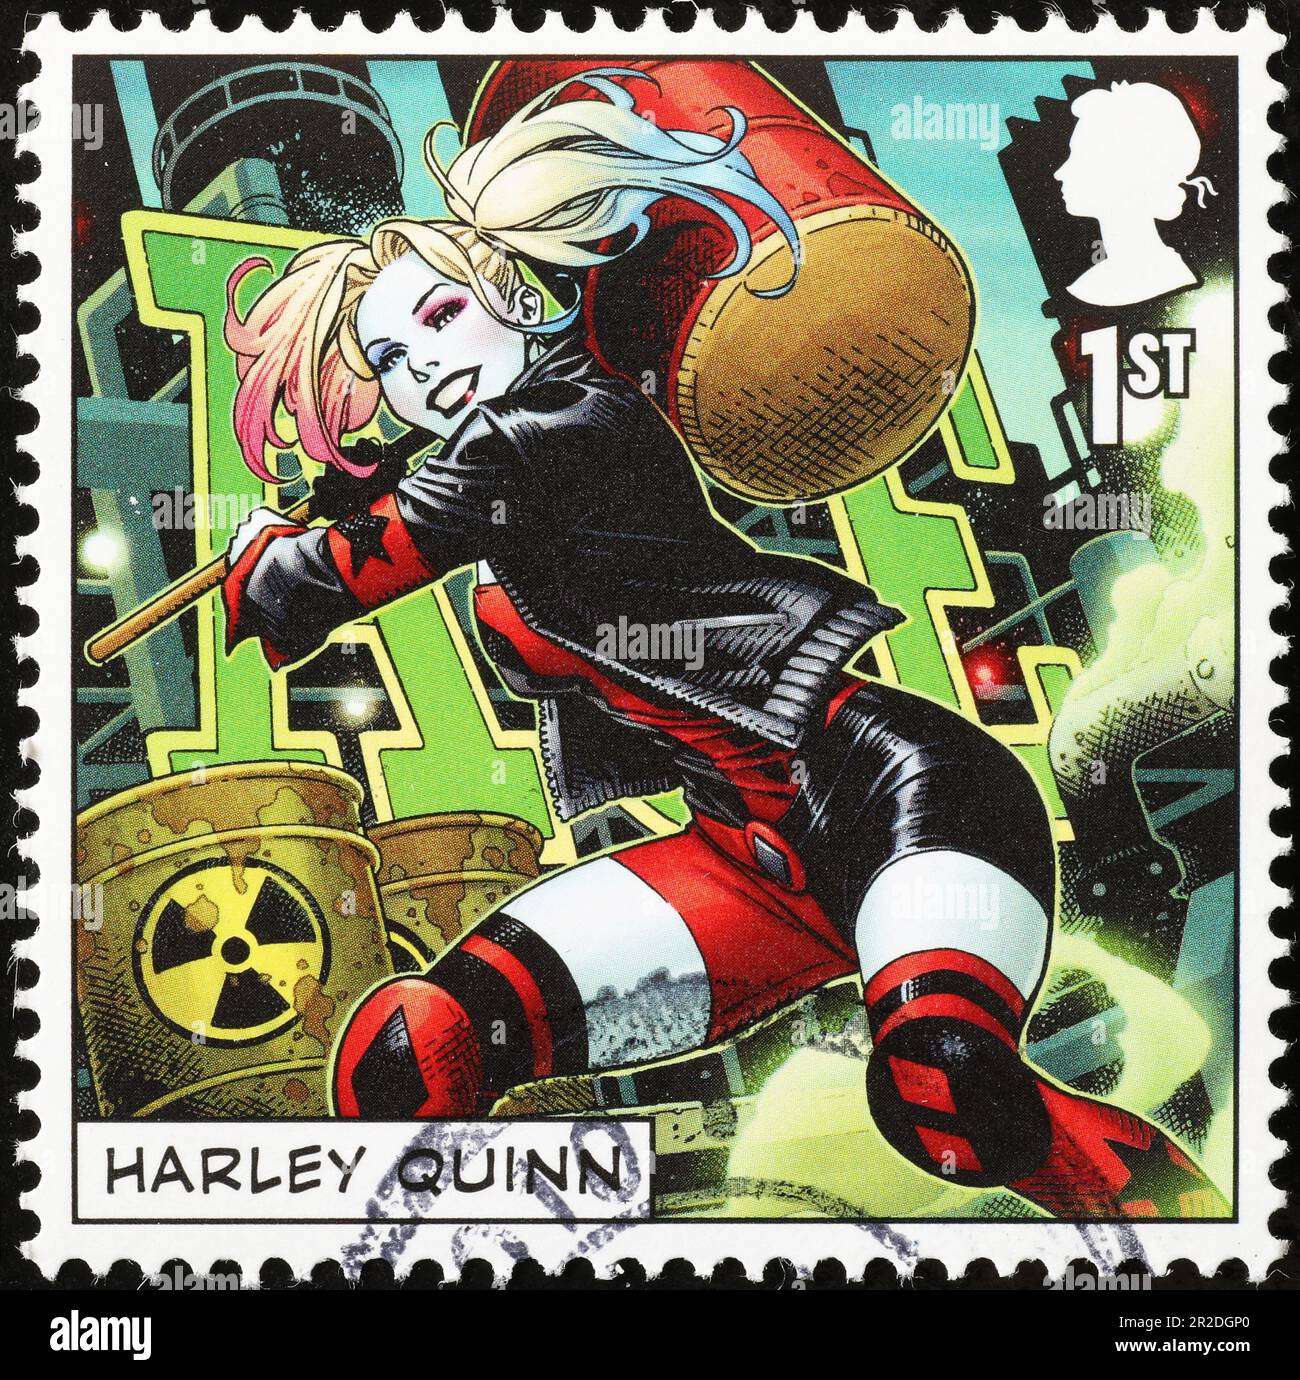 Cartoon Harley Quinn on british postage stamp Stock Photo